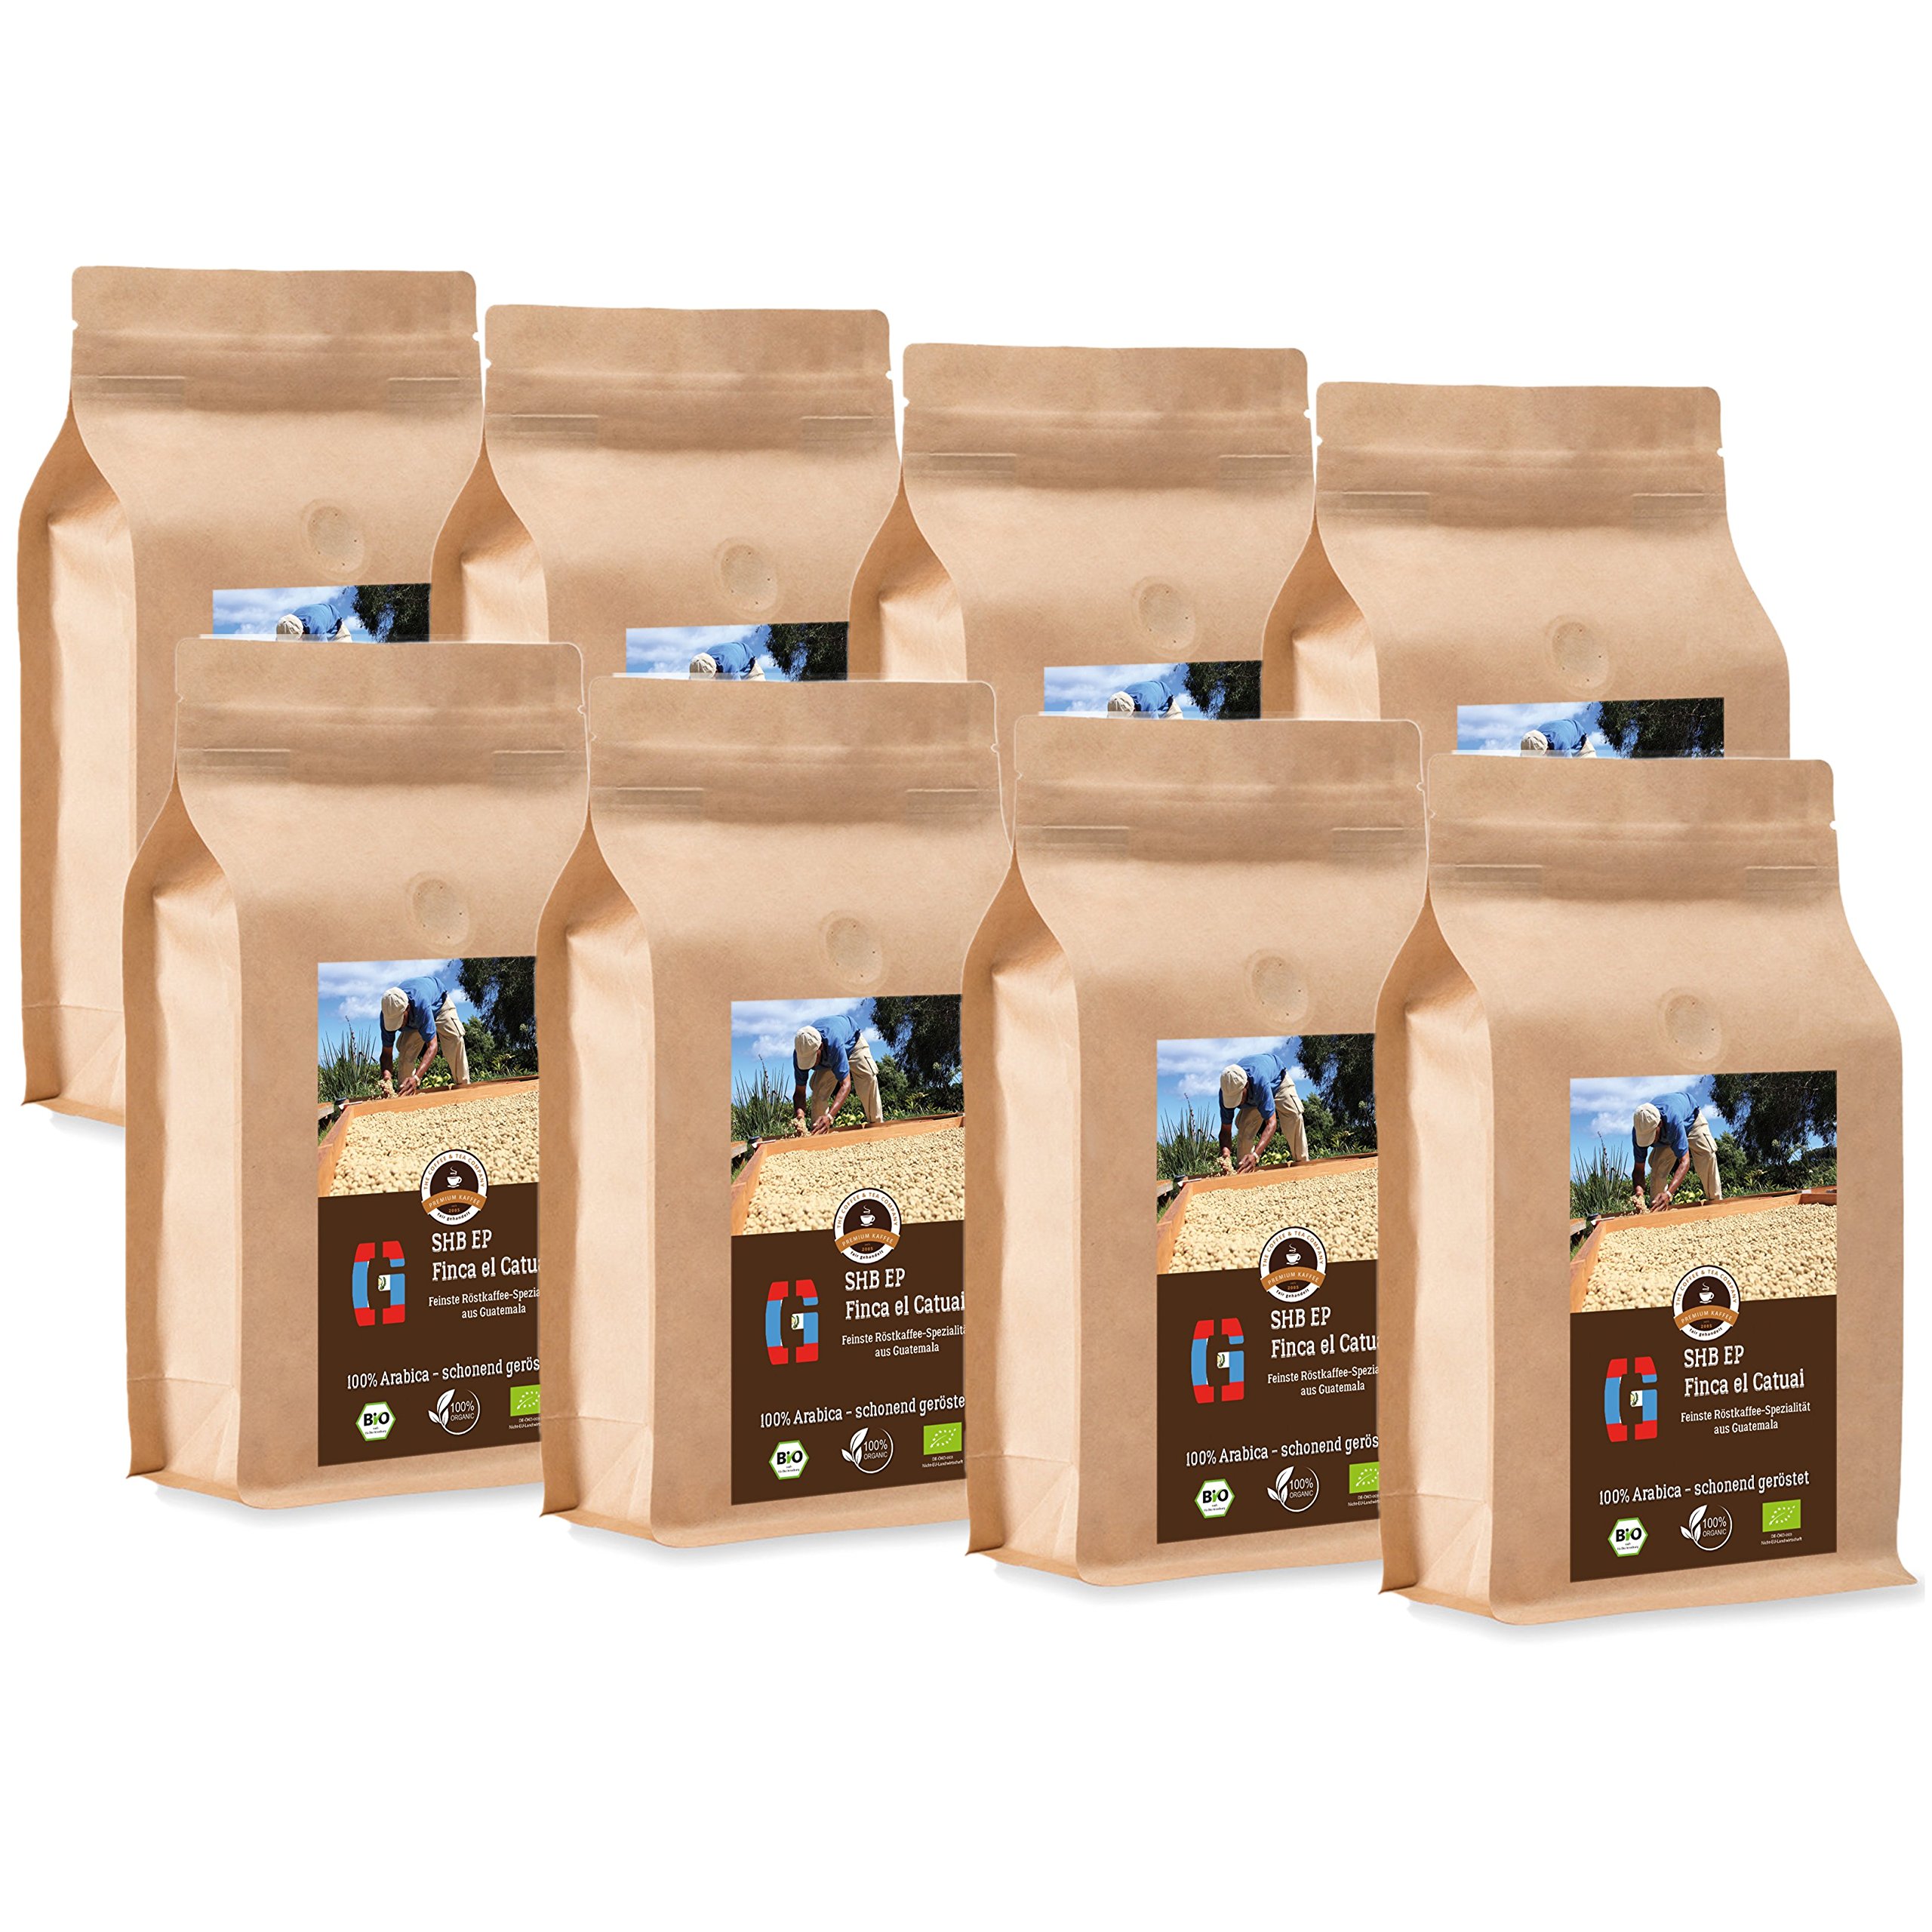 Kaffee Globetrotter - Bio Guatemala SHB EP Finca El Catuai - 8 x 1000 g Grob Gemalen - für Kaffee-Vollautomat, Kaffeemühle - Röstkaffee aus biologischem Anbau | Gastropack Sparpack